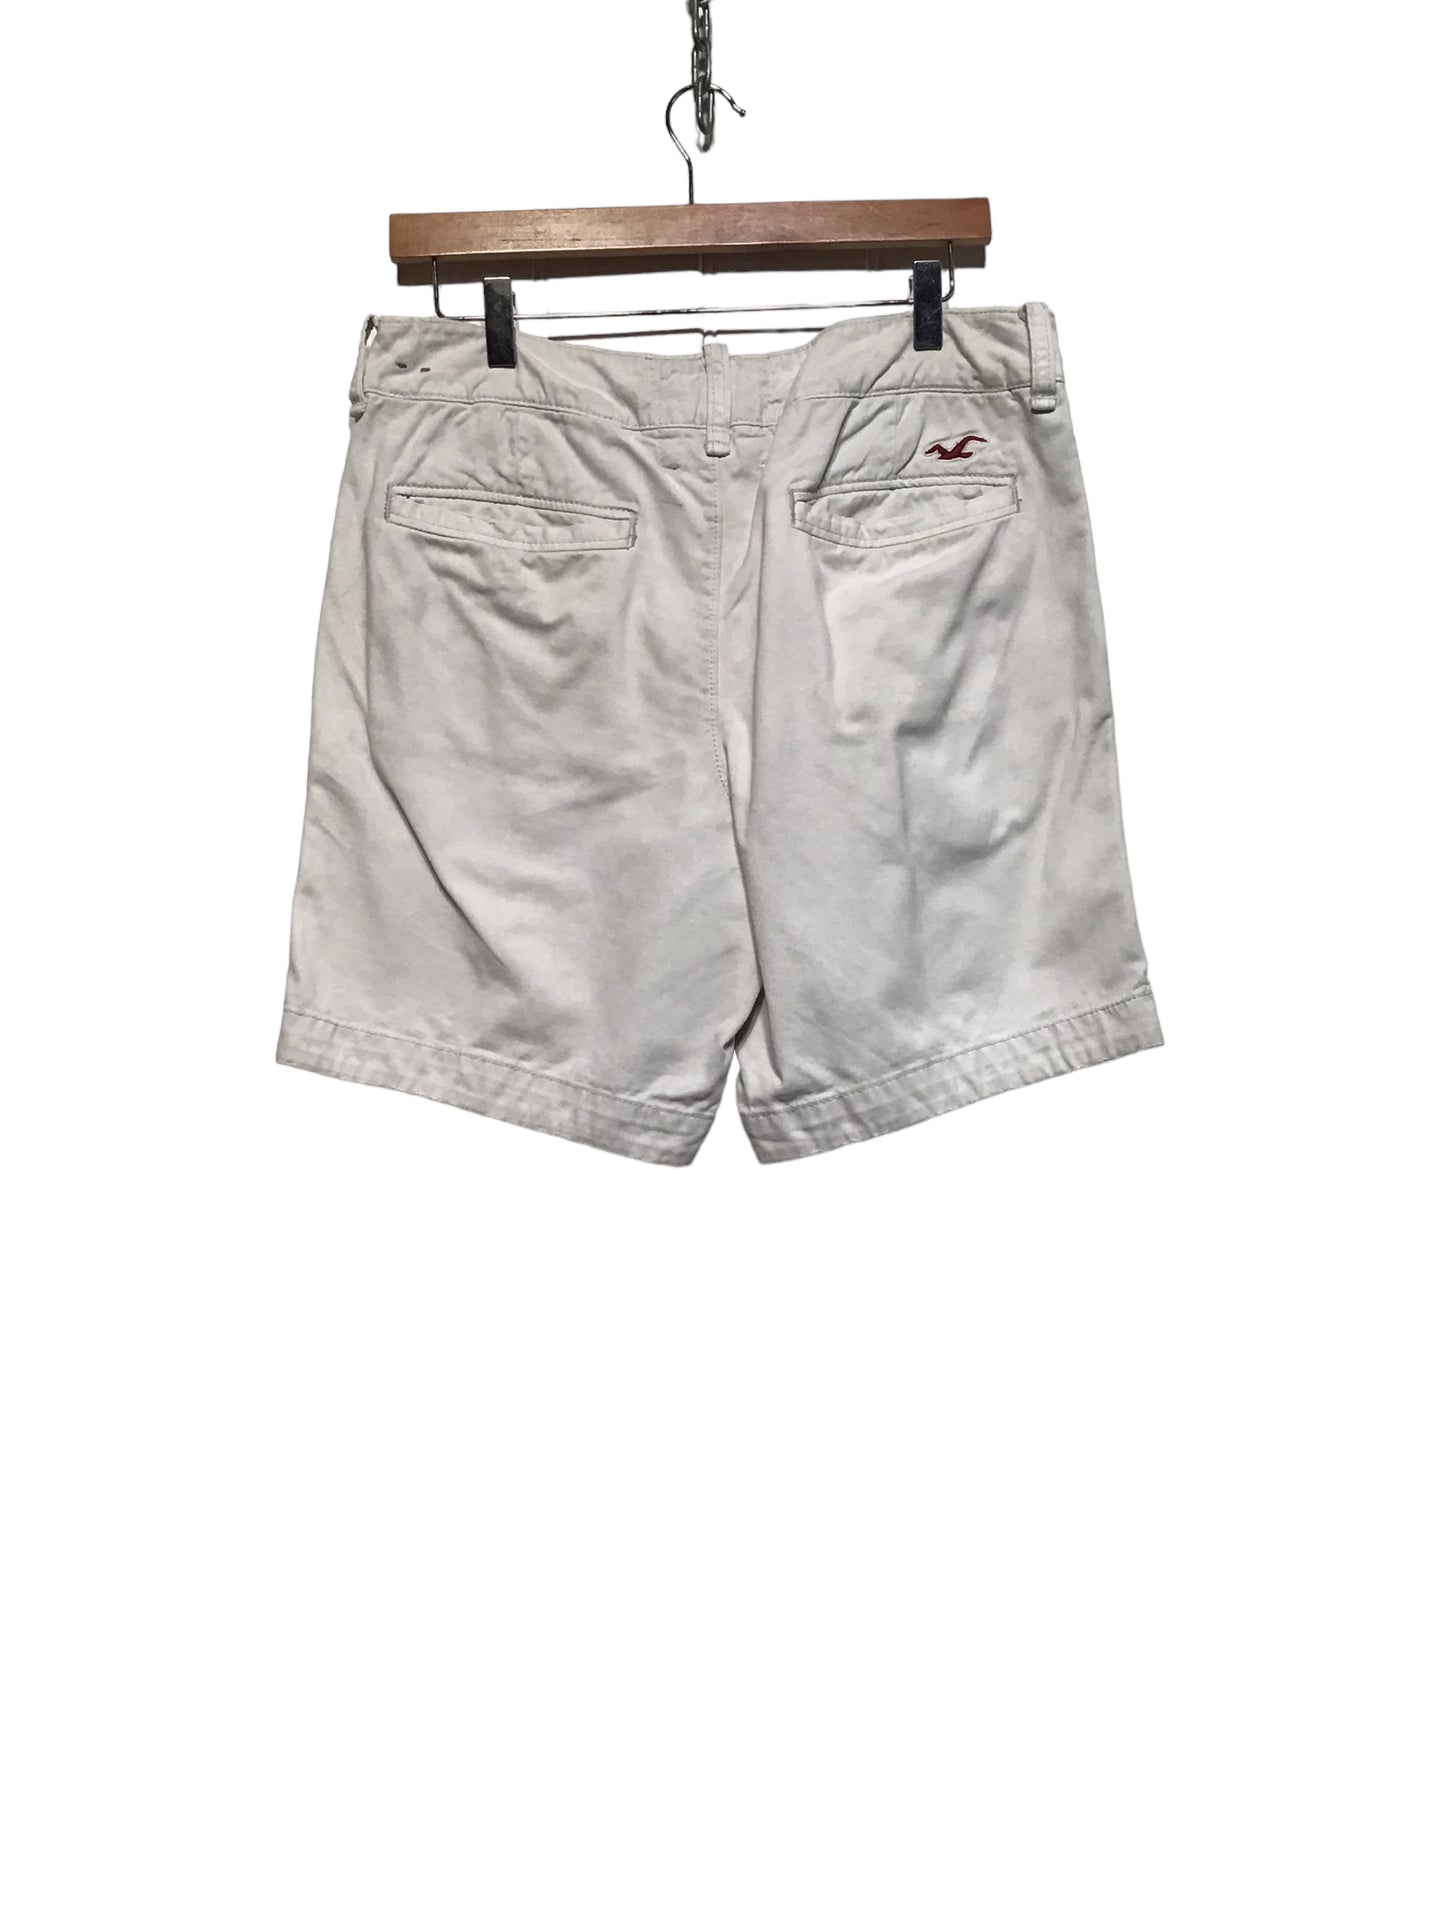 Chino Shorts (W31”)